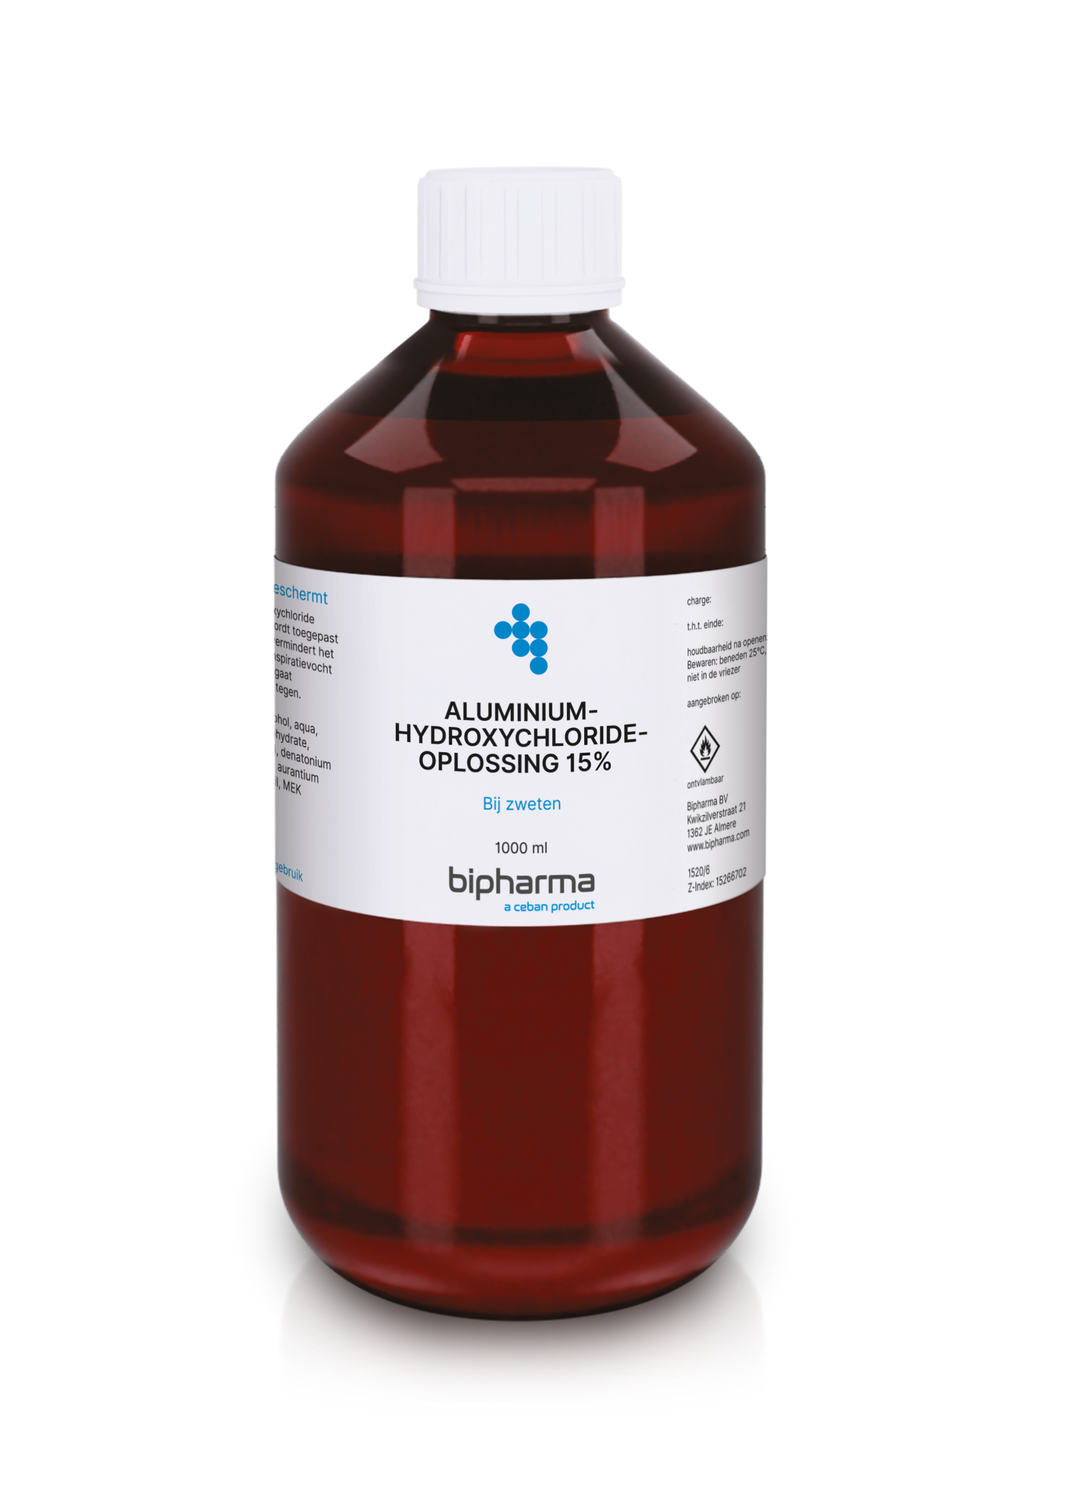 Bipharma Aluminiumhydroxychloride Oplossing 15% - BIPHARMA BV - Huidproducten.nl